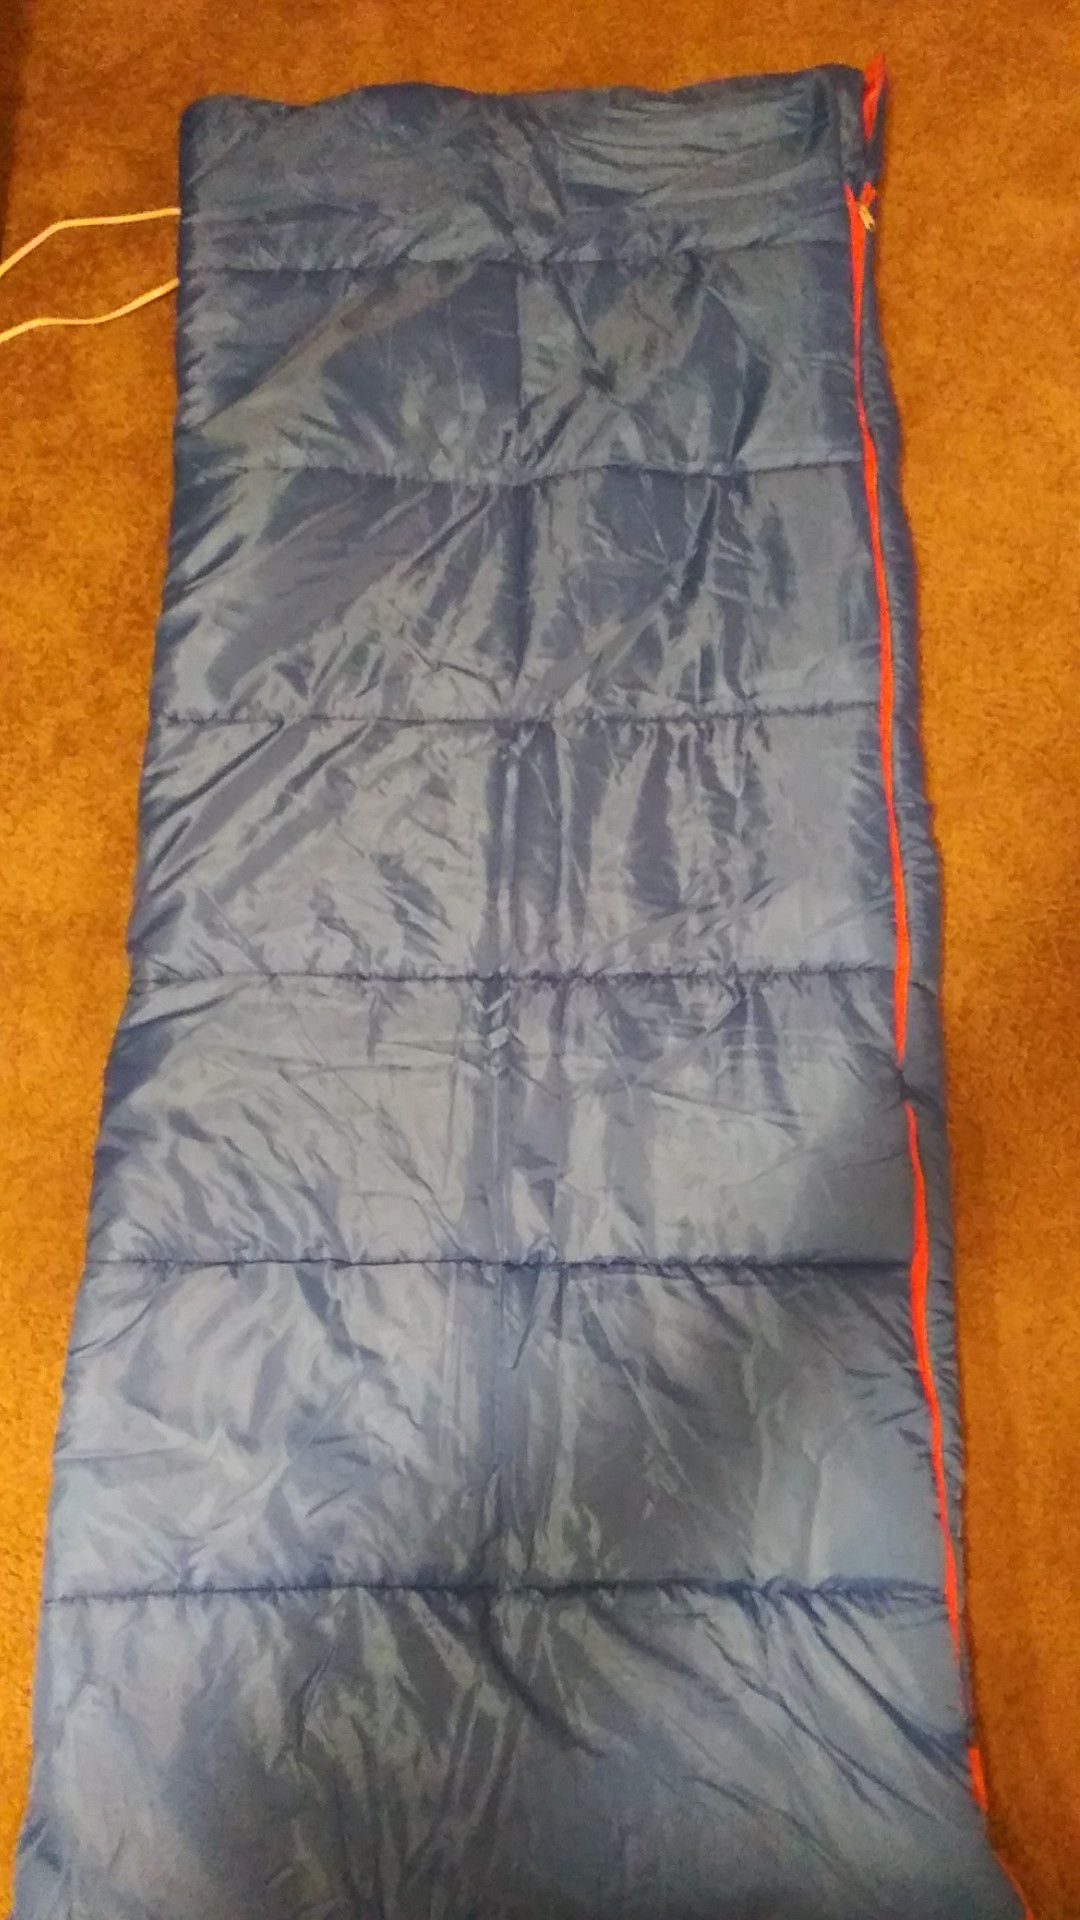 NEW Ozark trail sleeping bag.. No case make me an offer